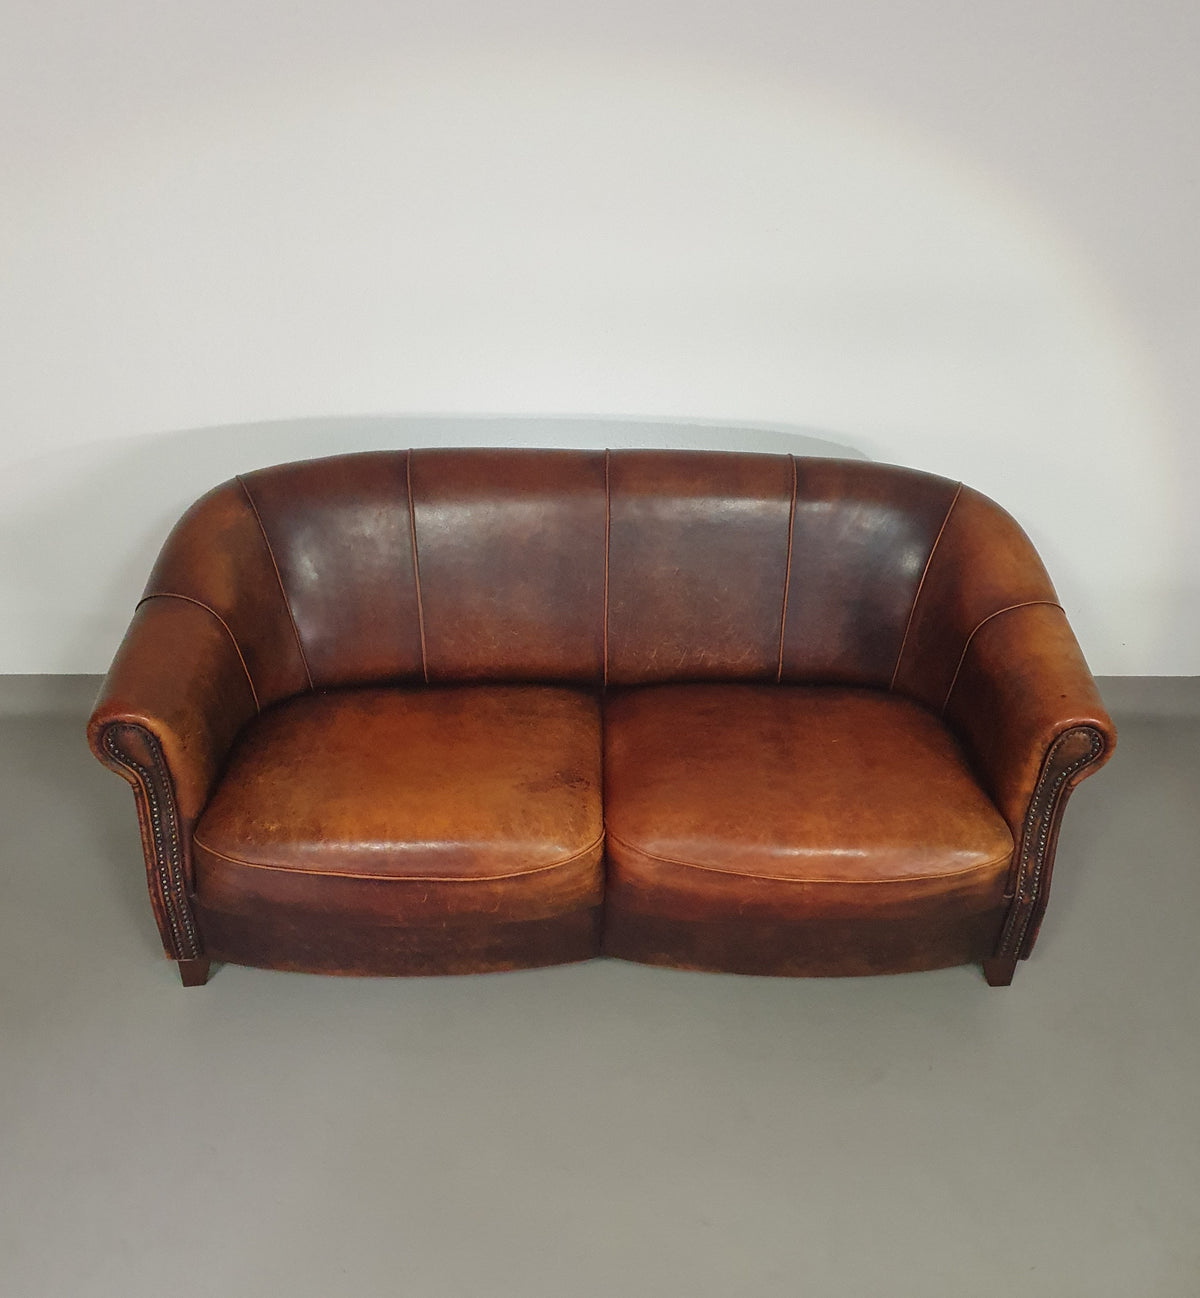 Beautiful subtly designed sheep leather sofa from the Joris brand